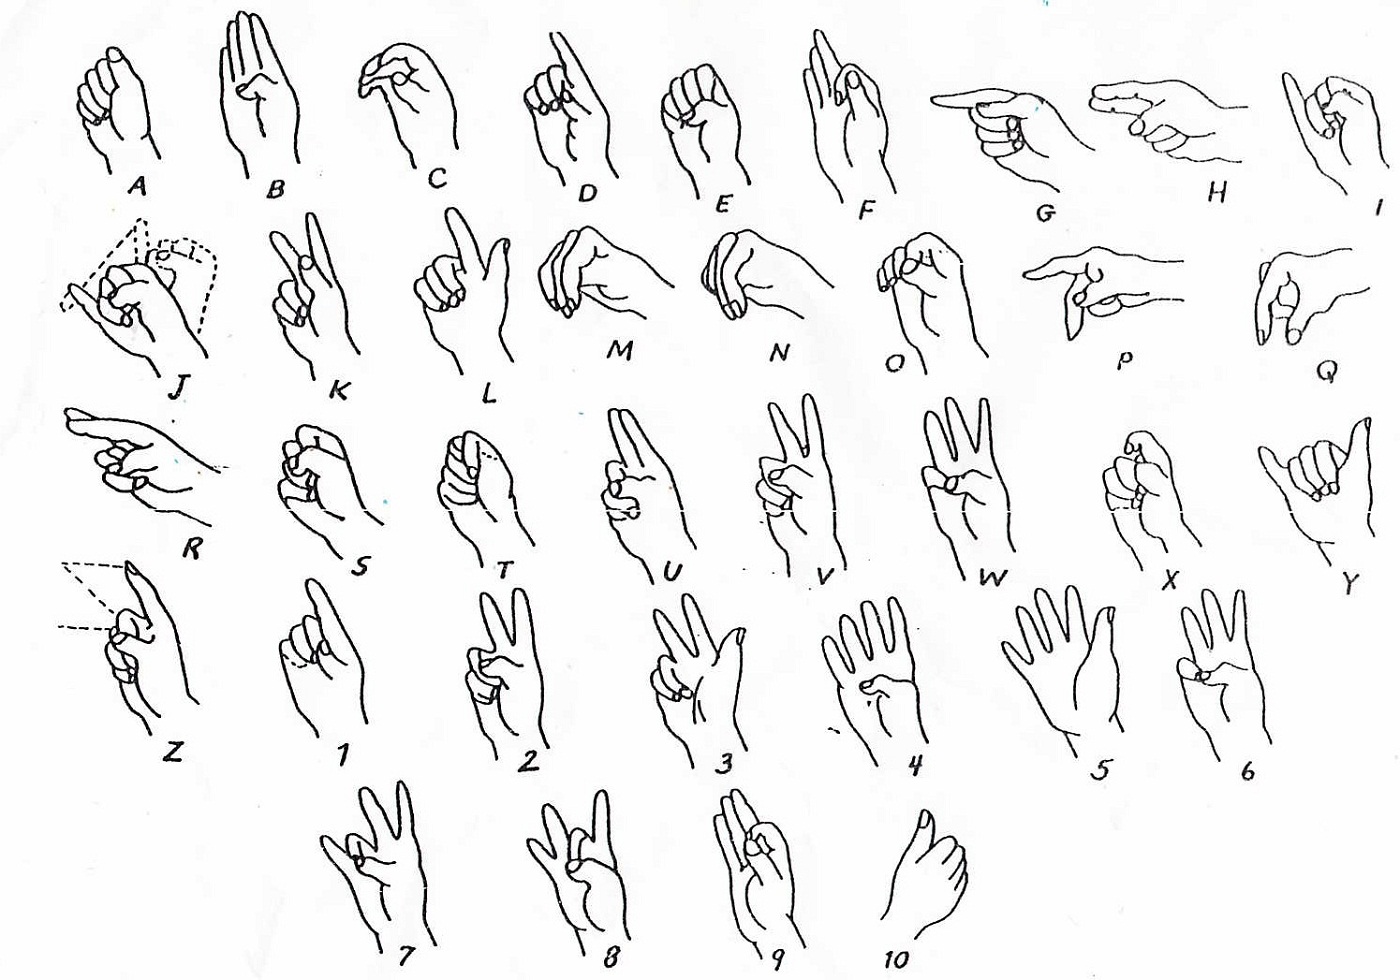 sign Language images 2016